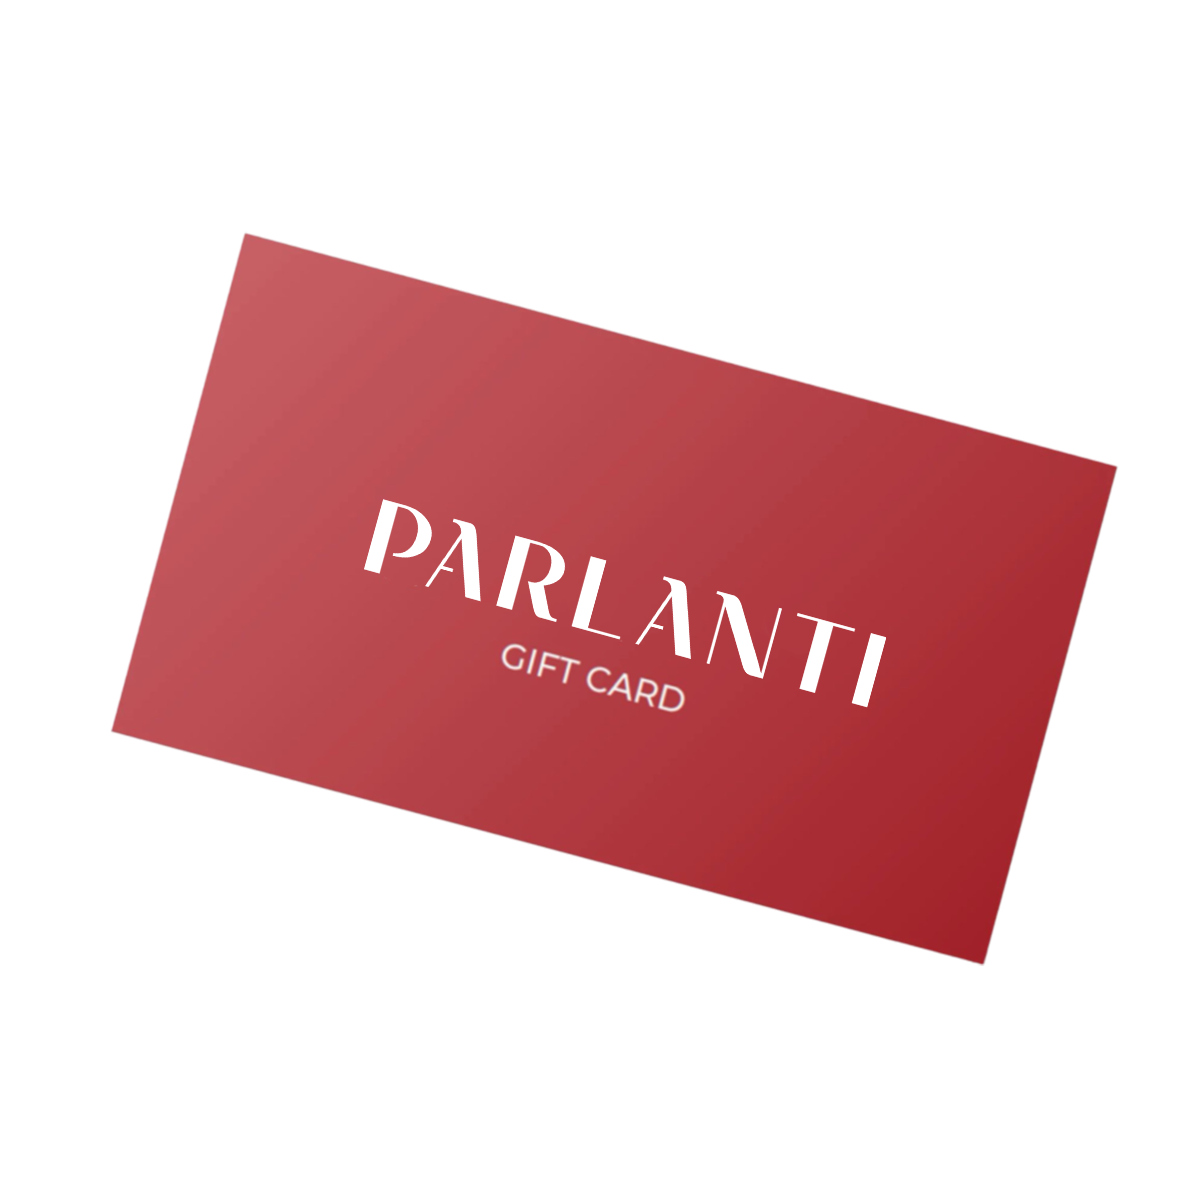 Parlanti E-Gift Card